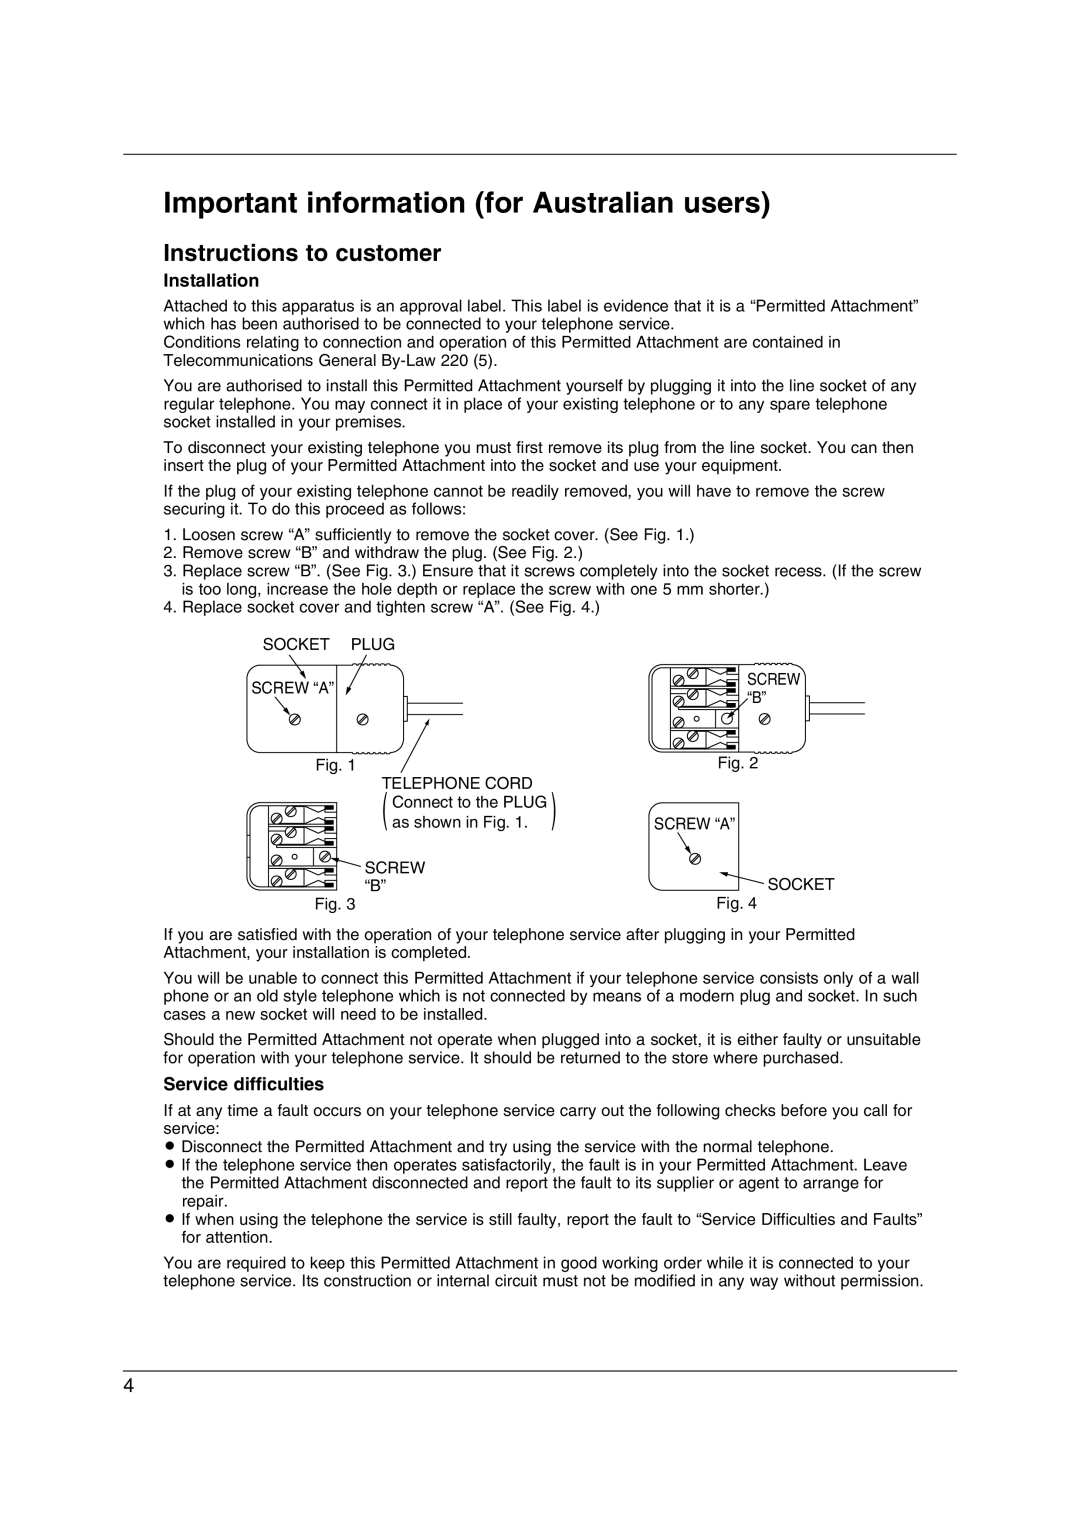 Panasonic KX-MC6020CX operating instructions Instructions to customer, Installation, Service difficulties 